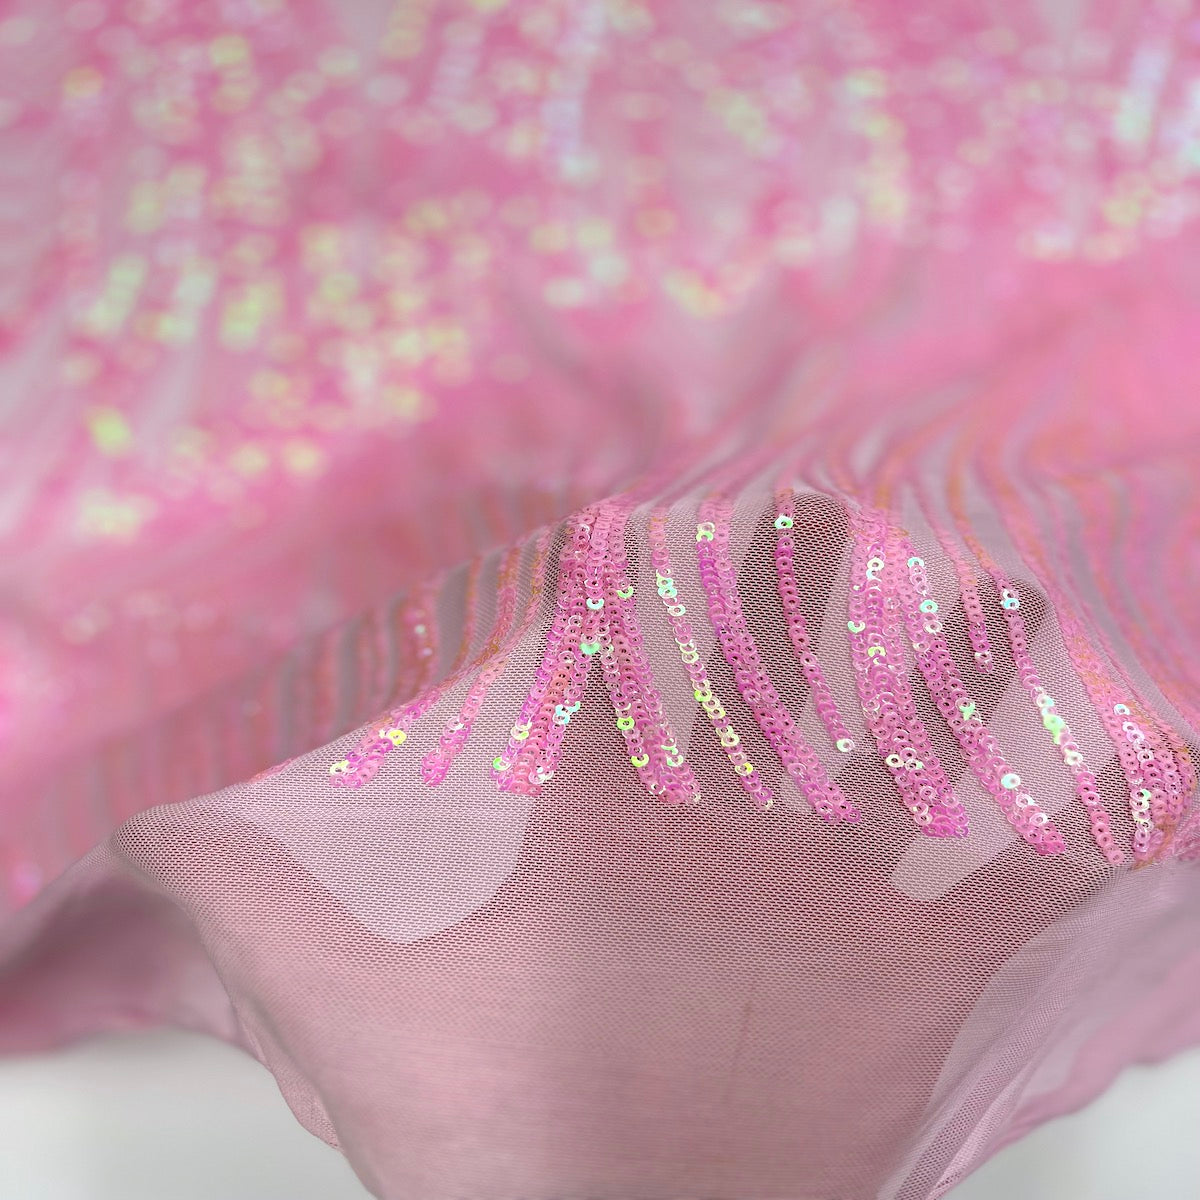 Tela de encaje de lentejuelas elásticas con ondas Selena iridiscente rosa bebé 